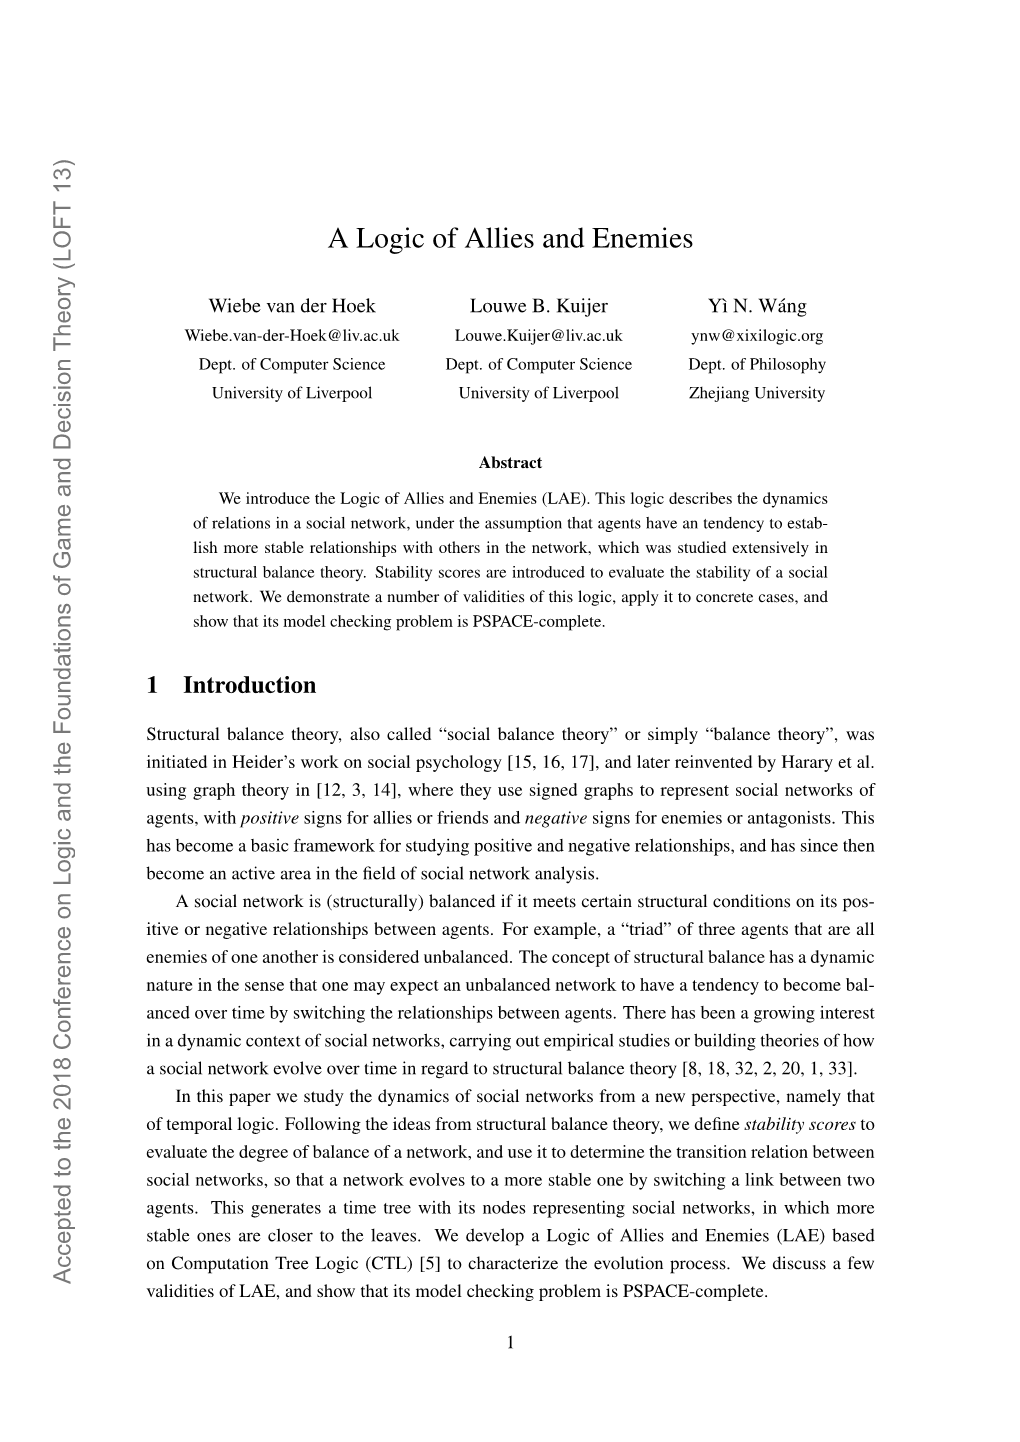 Logic of Allies and Enemies (LAE)